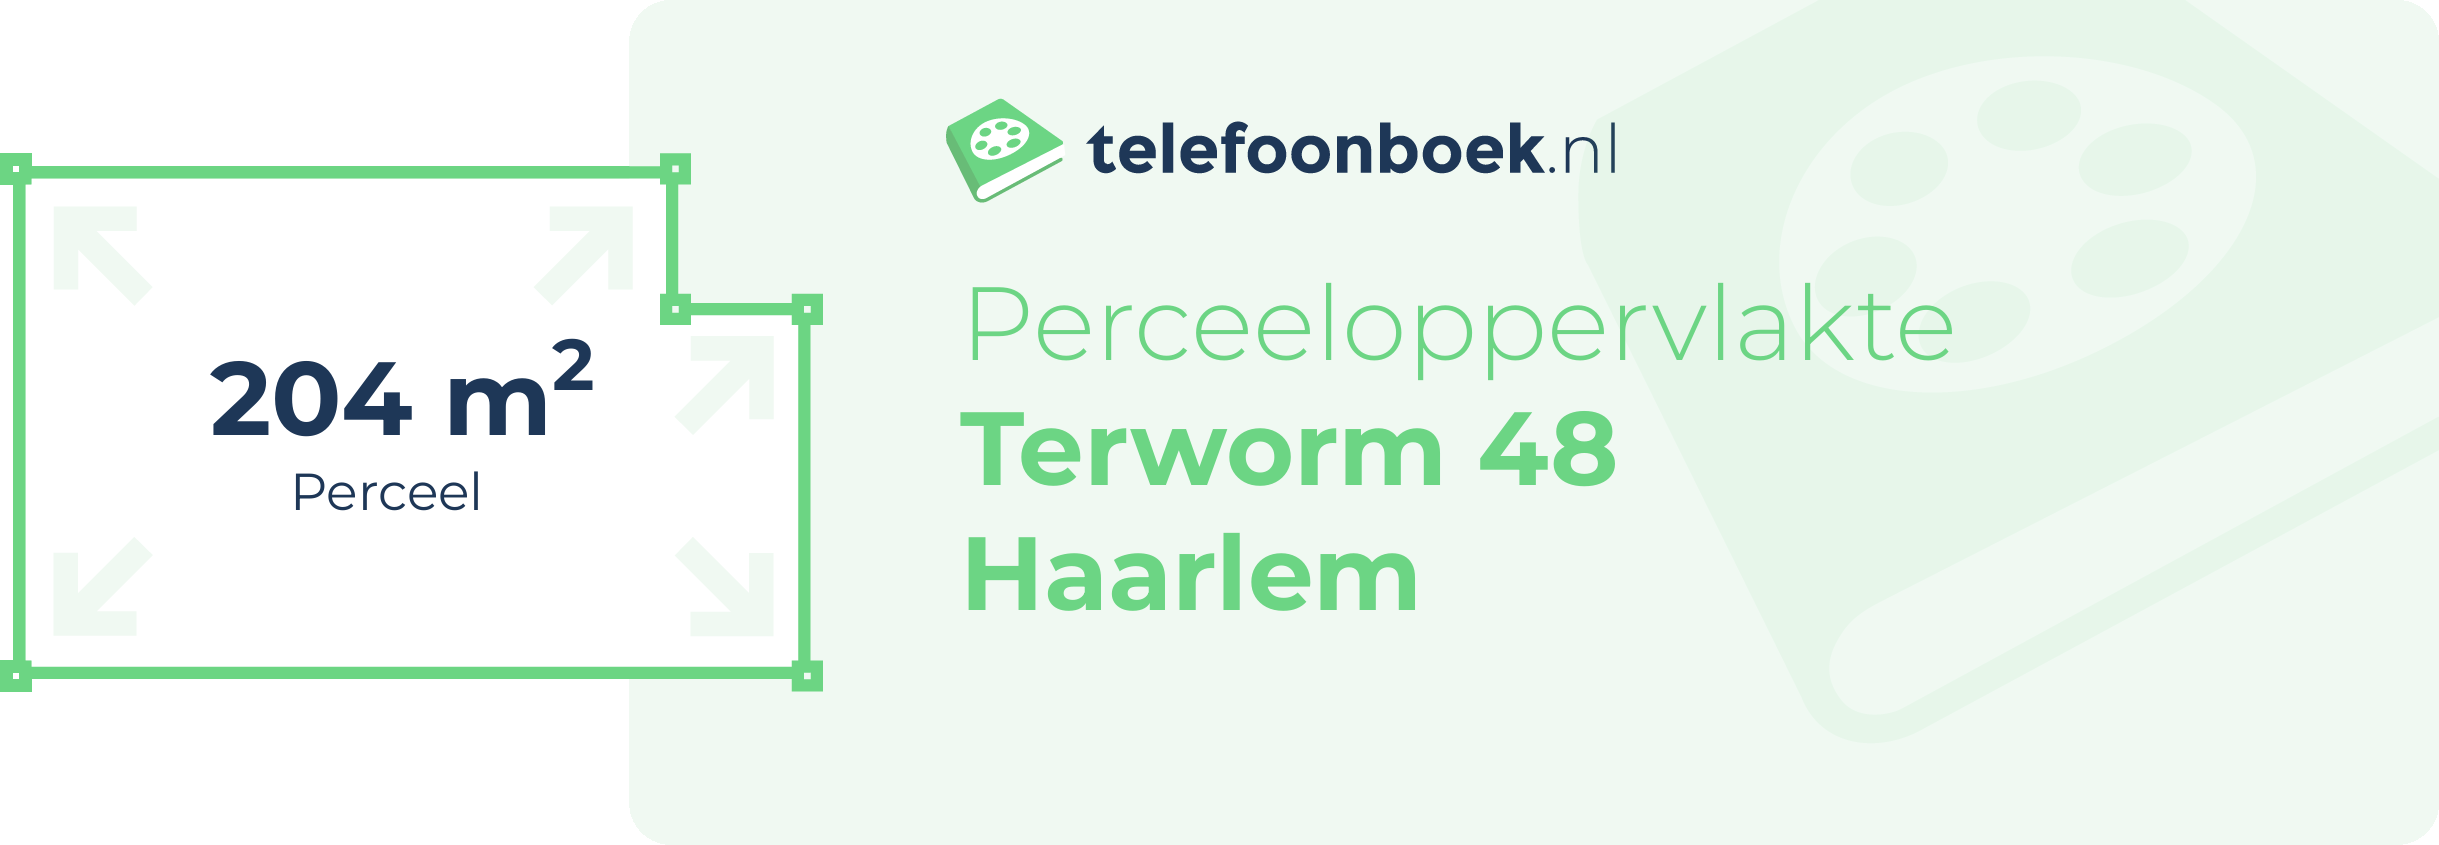 Perceeloppervlakte Terworm 48 Haarlem